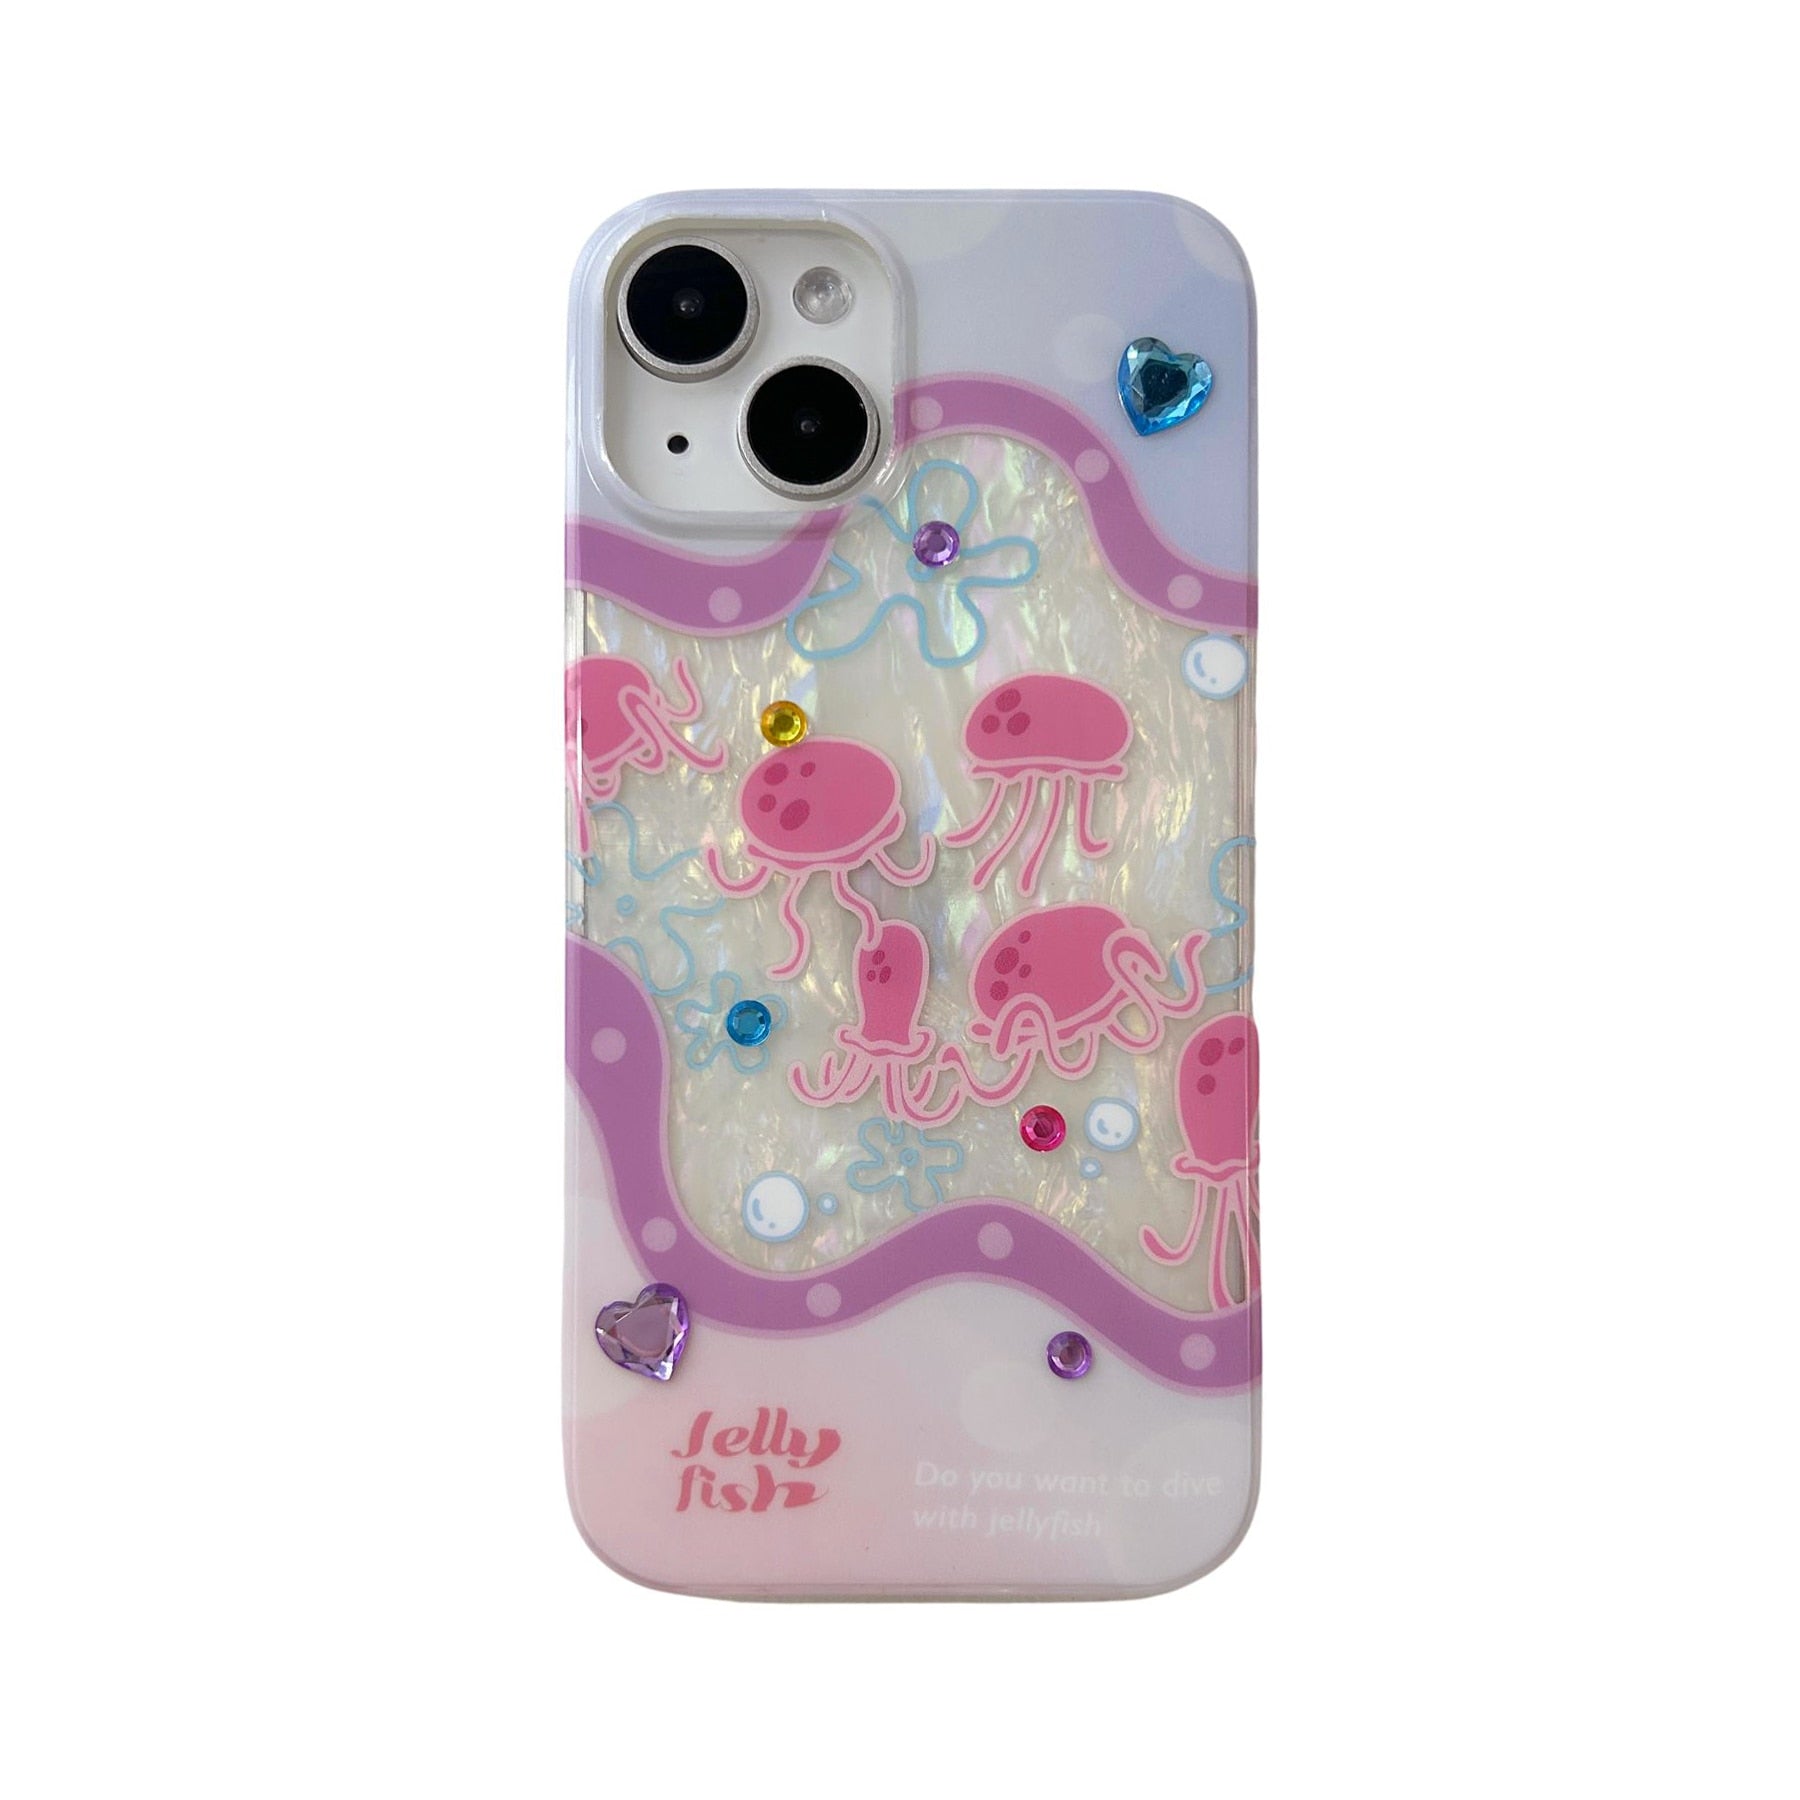 Jellyfish Glitter iPhone Case - iPhone Cases